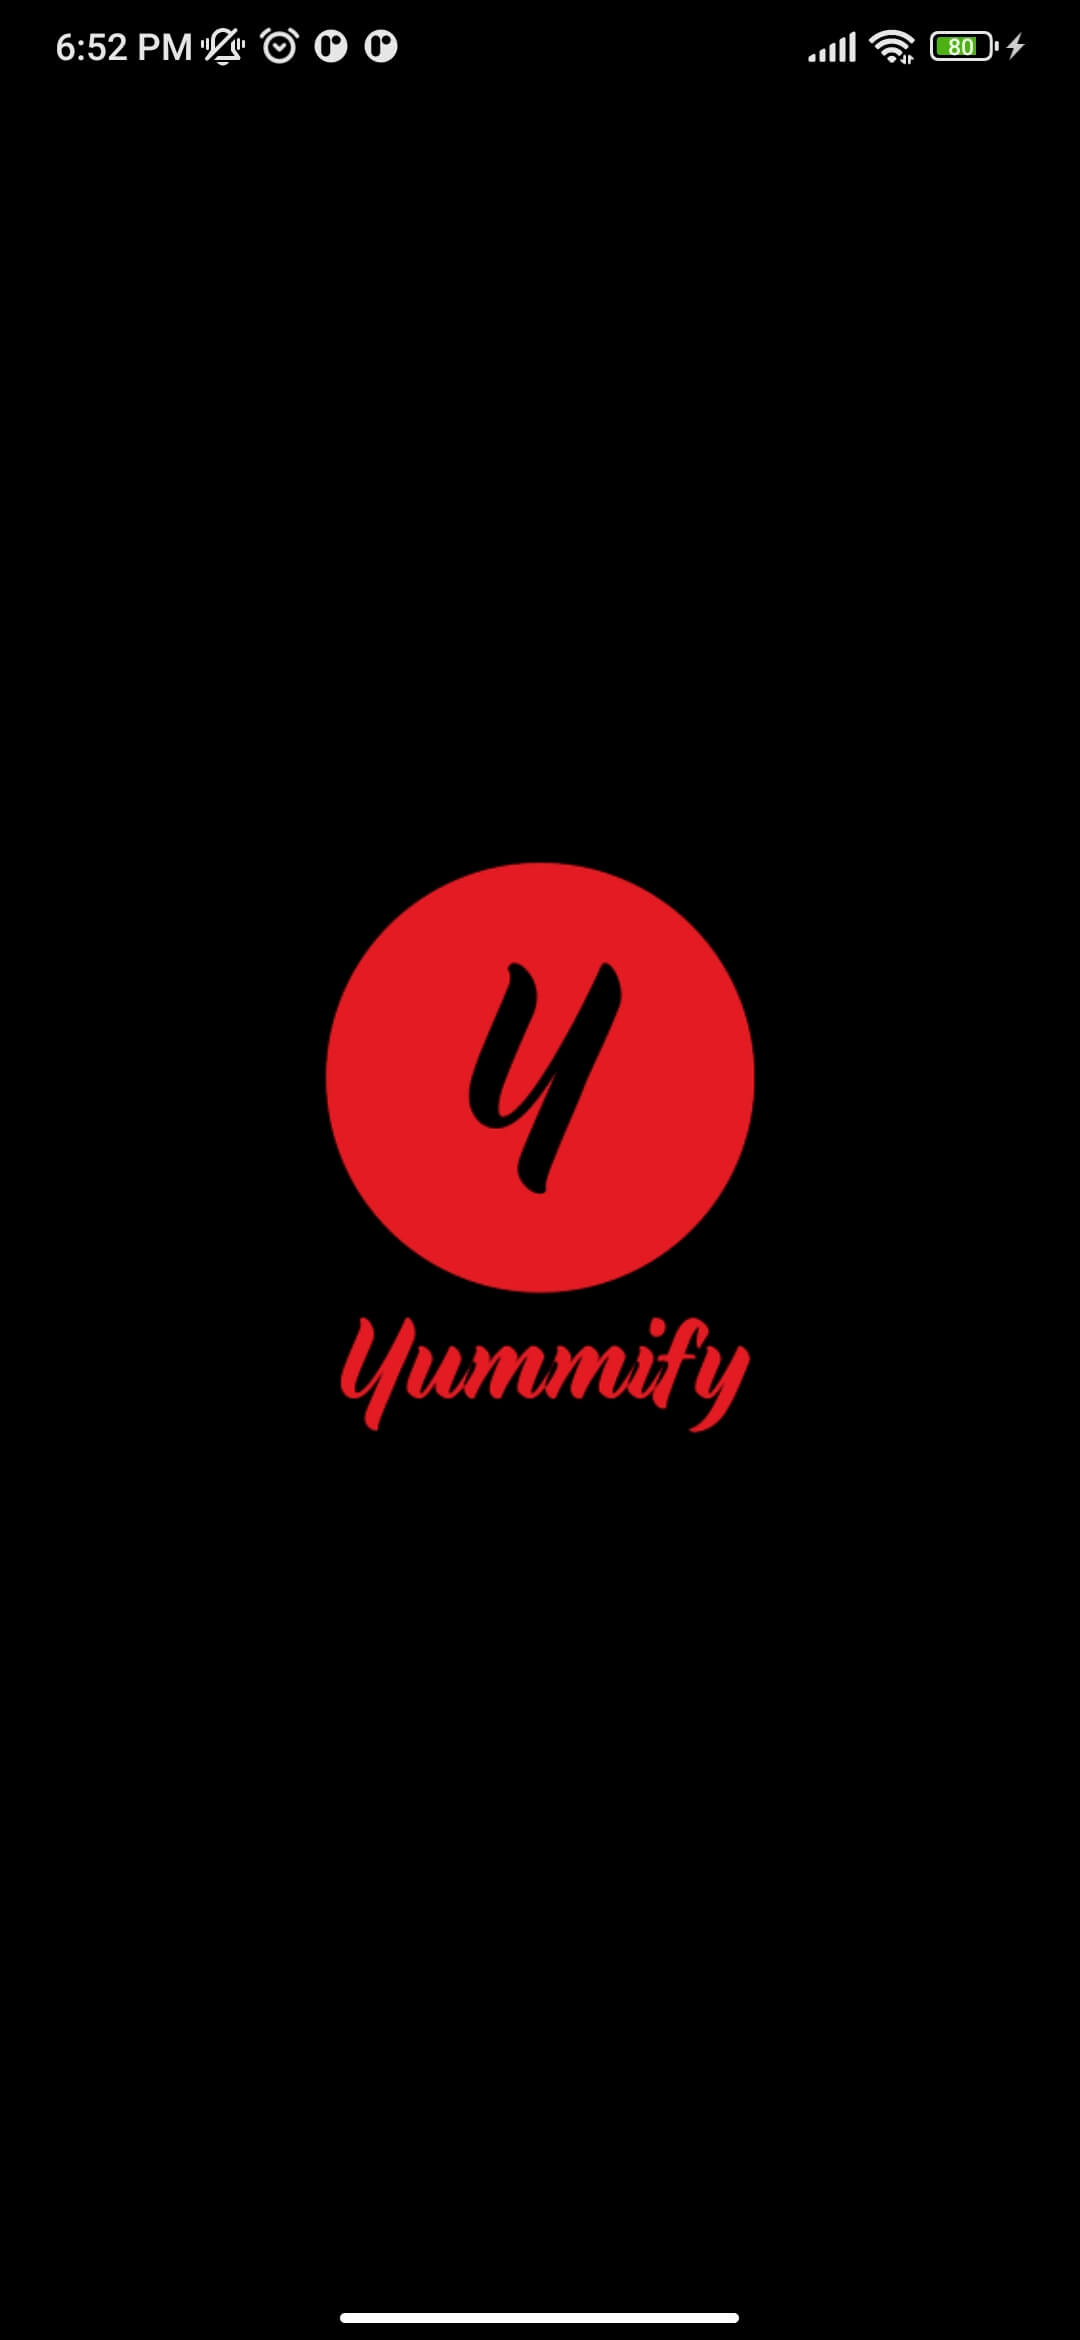 Yummify: A Fully-functional Restaurant Menu App using Flutter